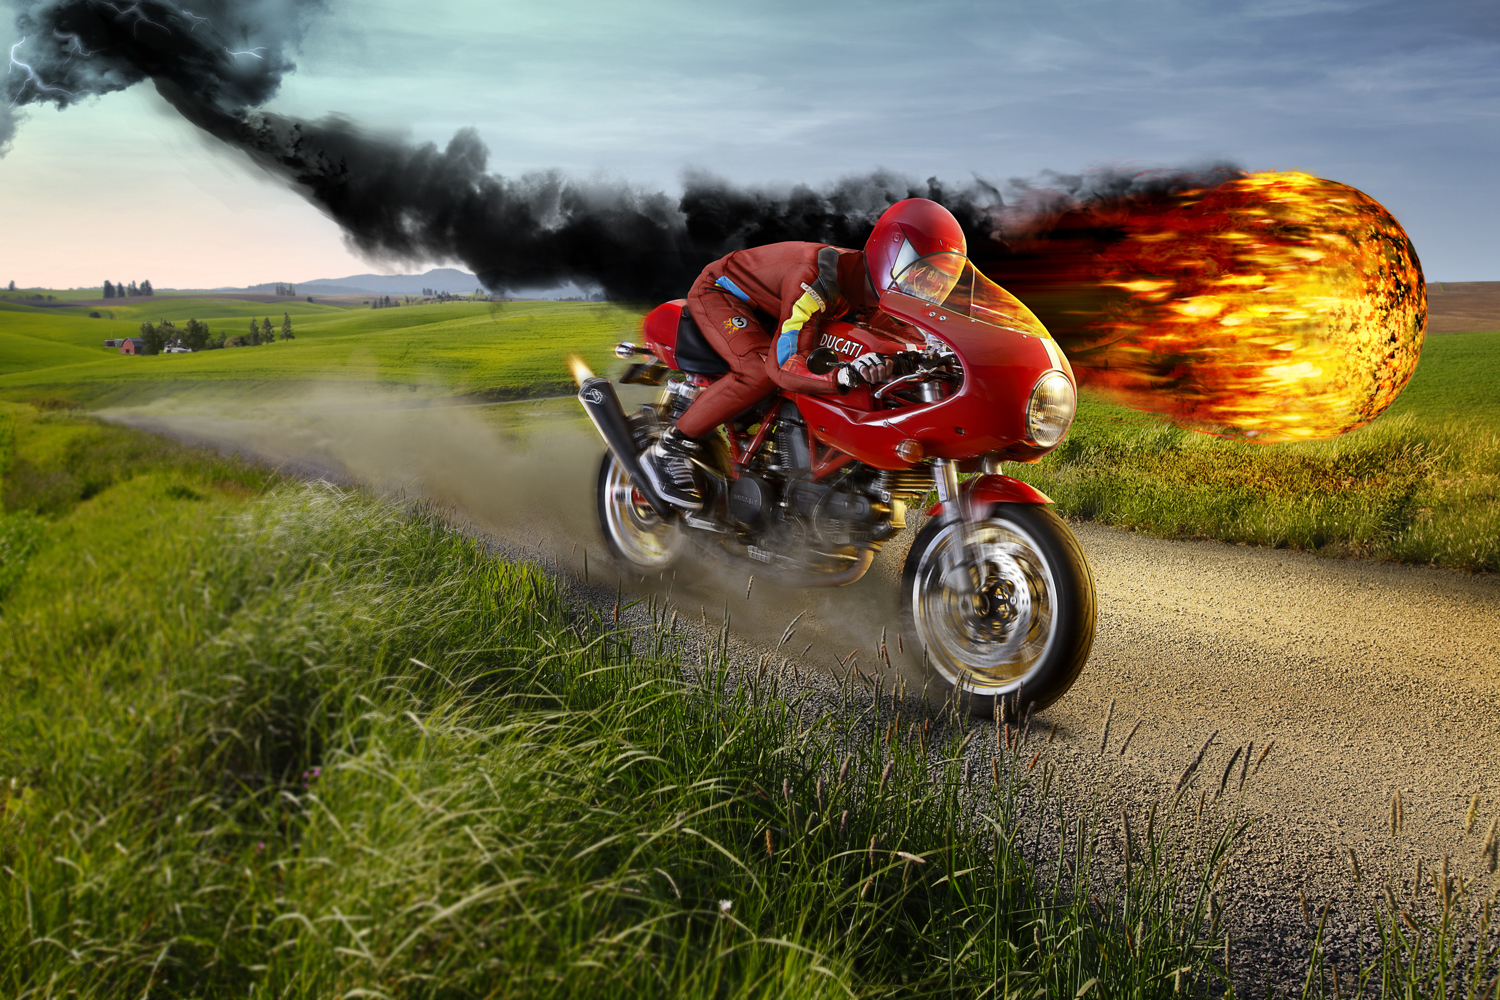 Digital art of Ducati motorcycle racing a fireball through a green field